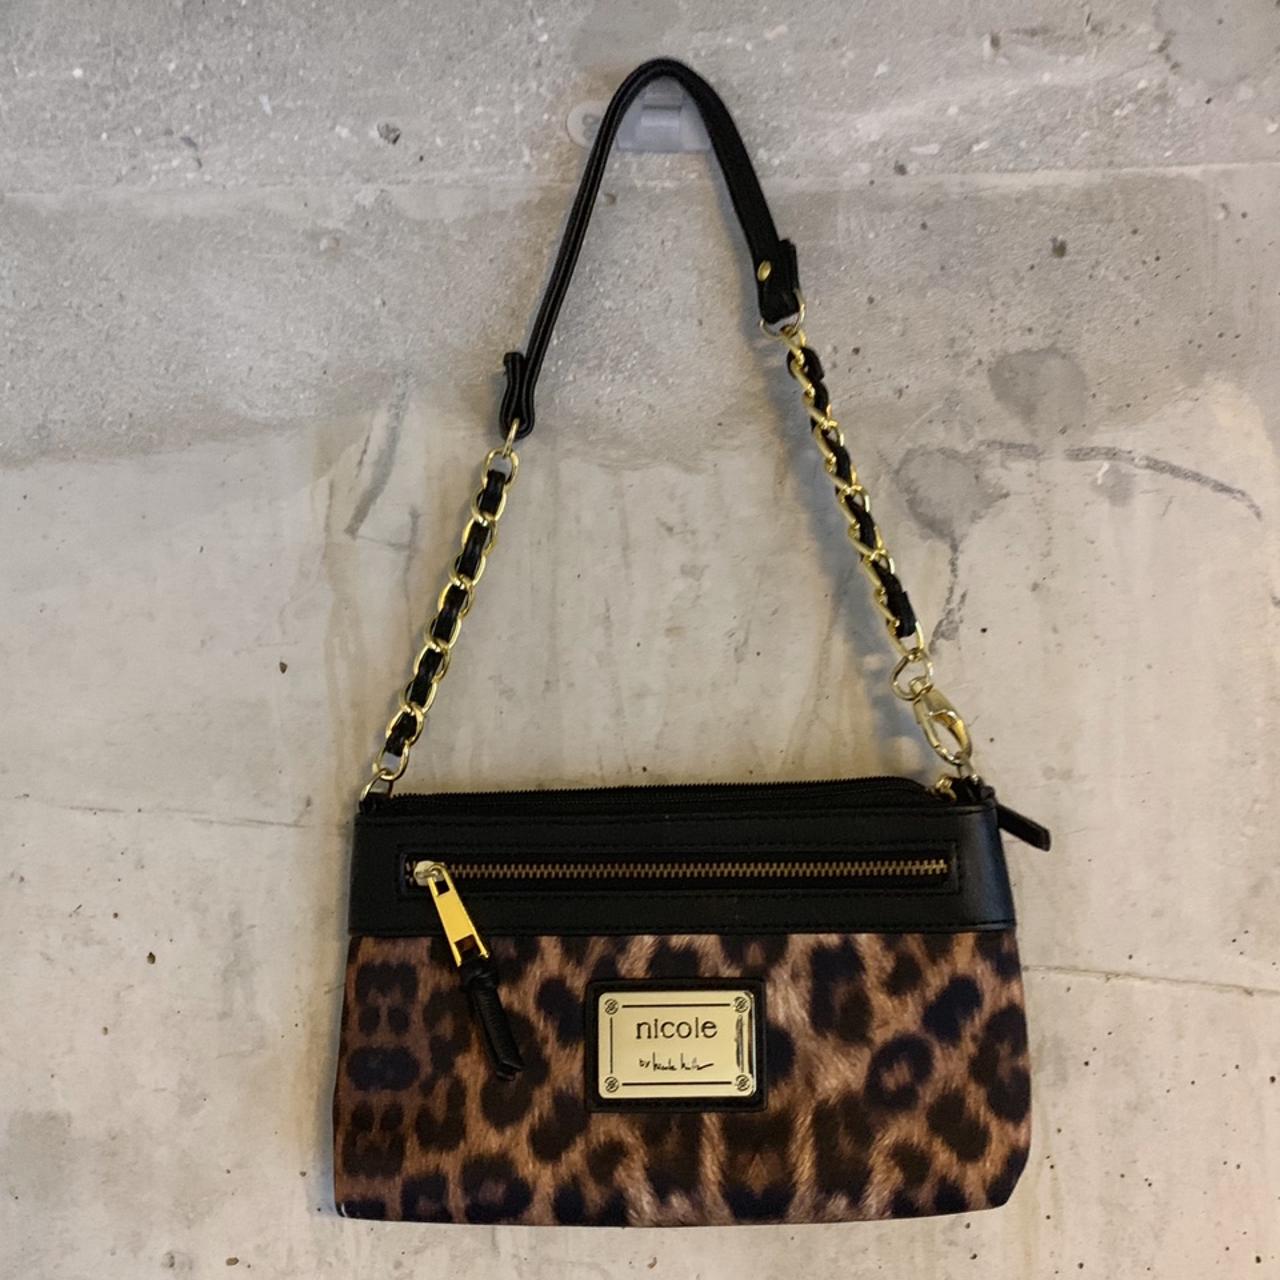 Nicole Miller New York Designer Travel Duffel Handbag Collection -  Oversized 22 Inch Carry On for Women - Weekender Overnight Shoulder Tote  Box Bag (Rosalie Beige) : Buy Online at Best Price